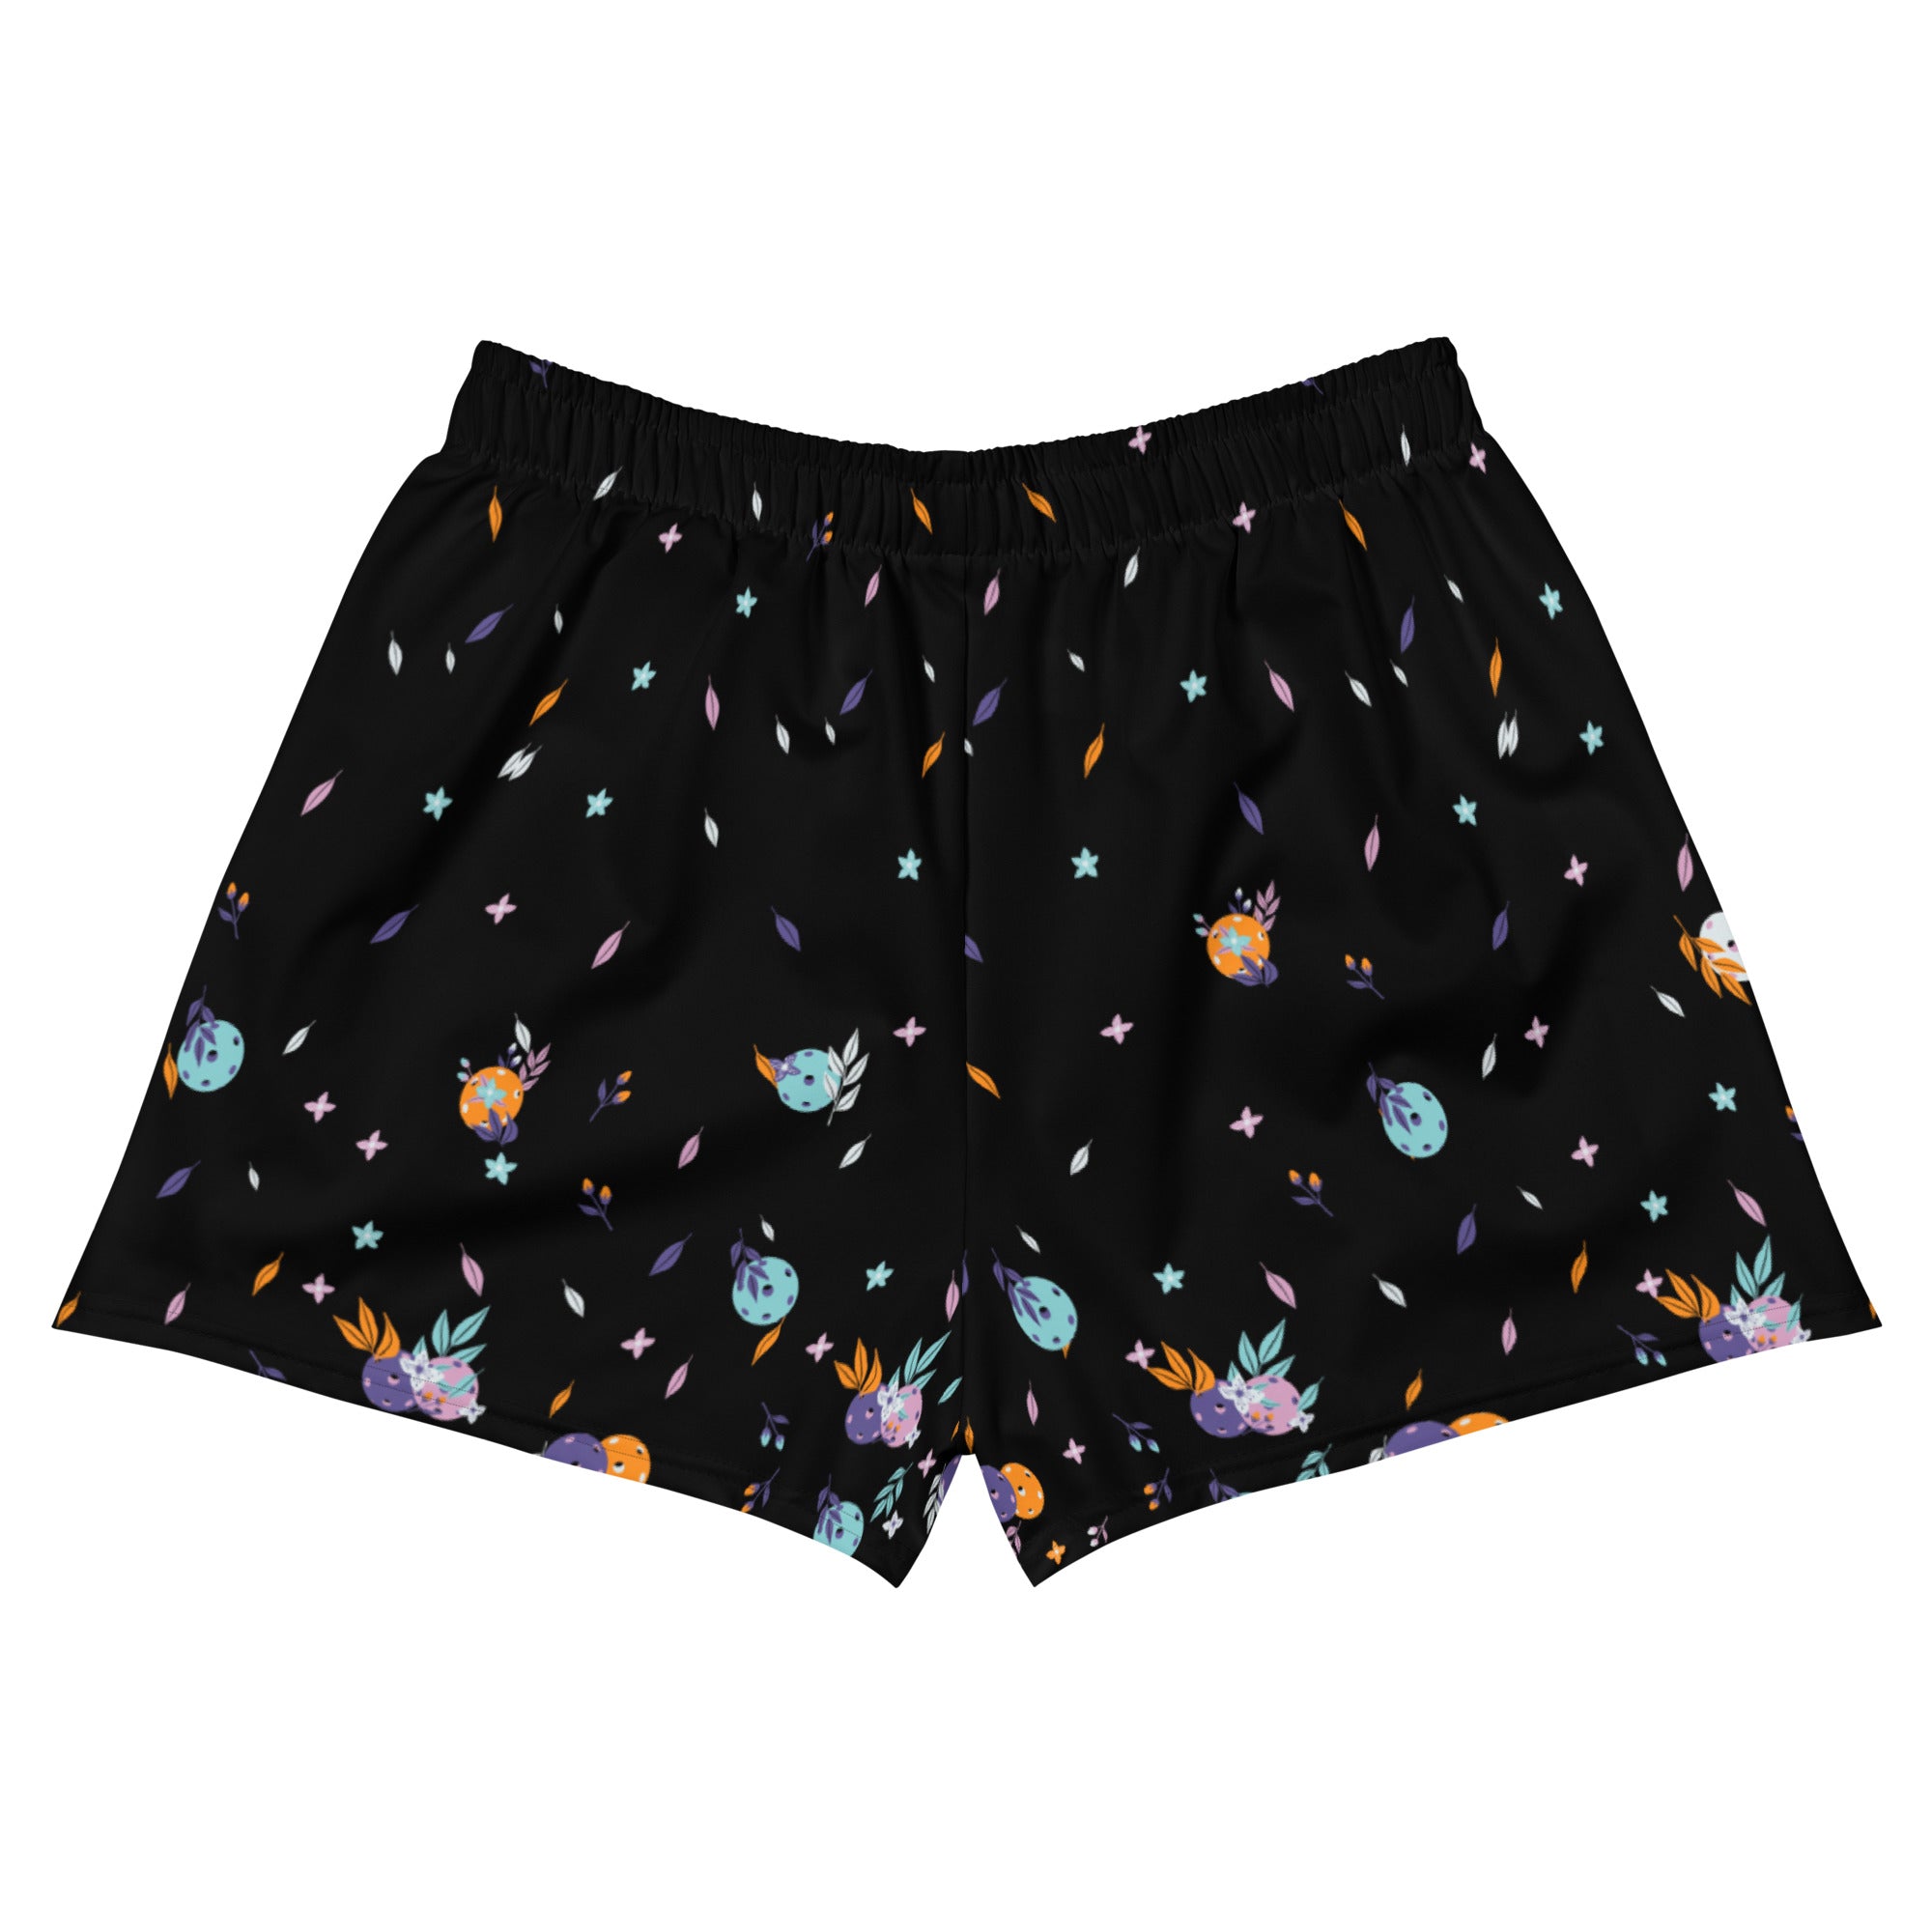 "La Vie en Noir du Pickleball" Spring Dink Gradient© Multi-Colored Women's Pickleball Athletic Short Shorts w/pockets